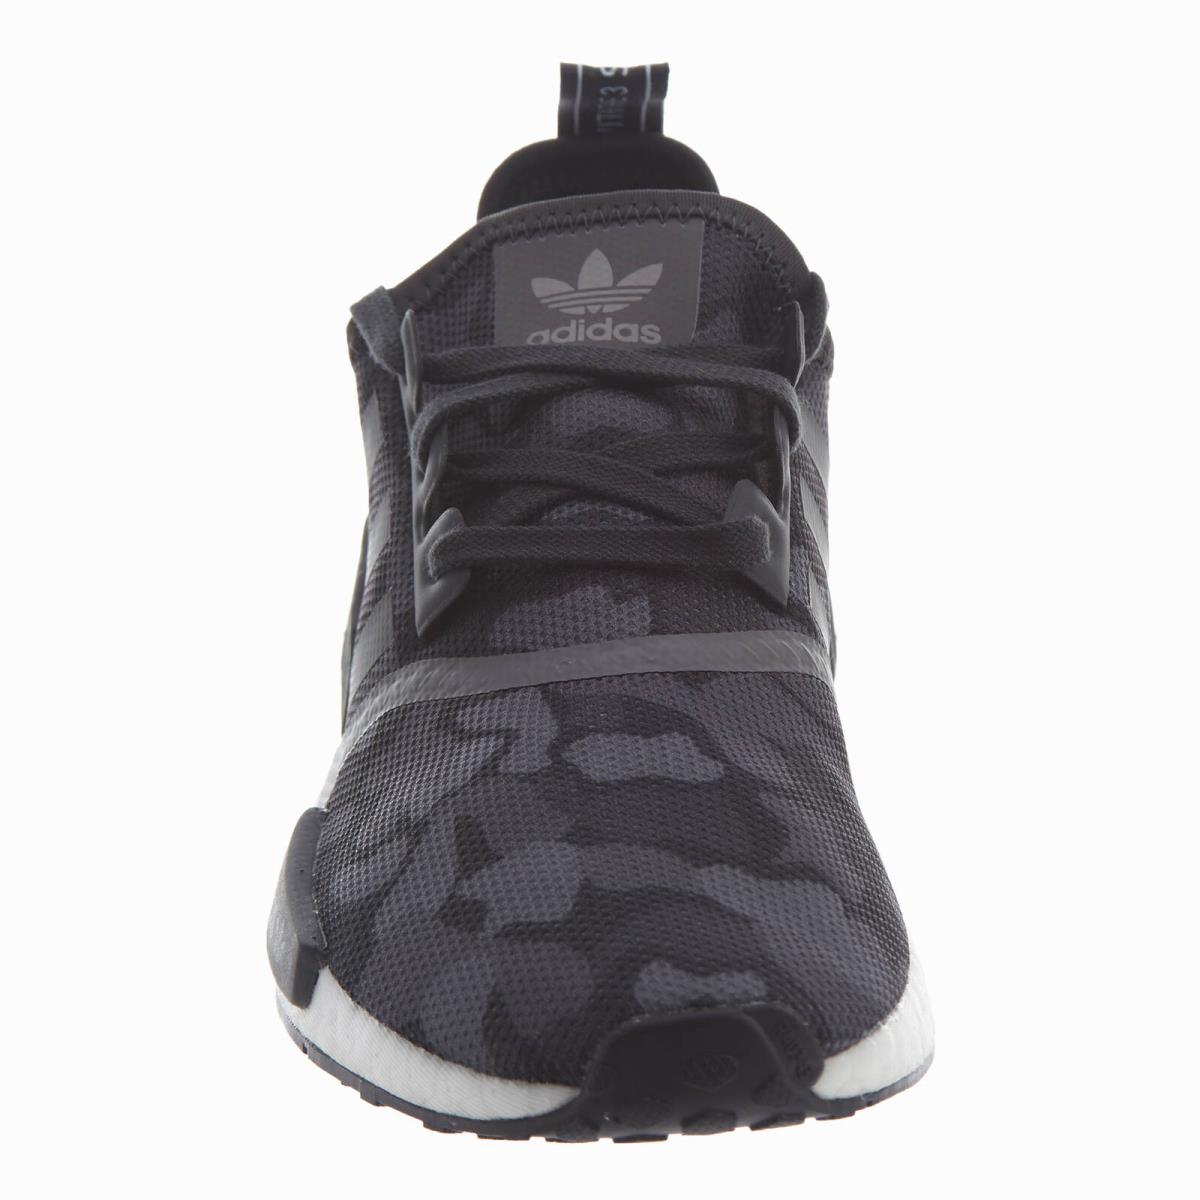 Adidas Originals Nmd R1 Duck Shoes Mens Style :D96616 - Core Black/Grey Four-Grey Five